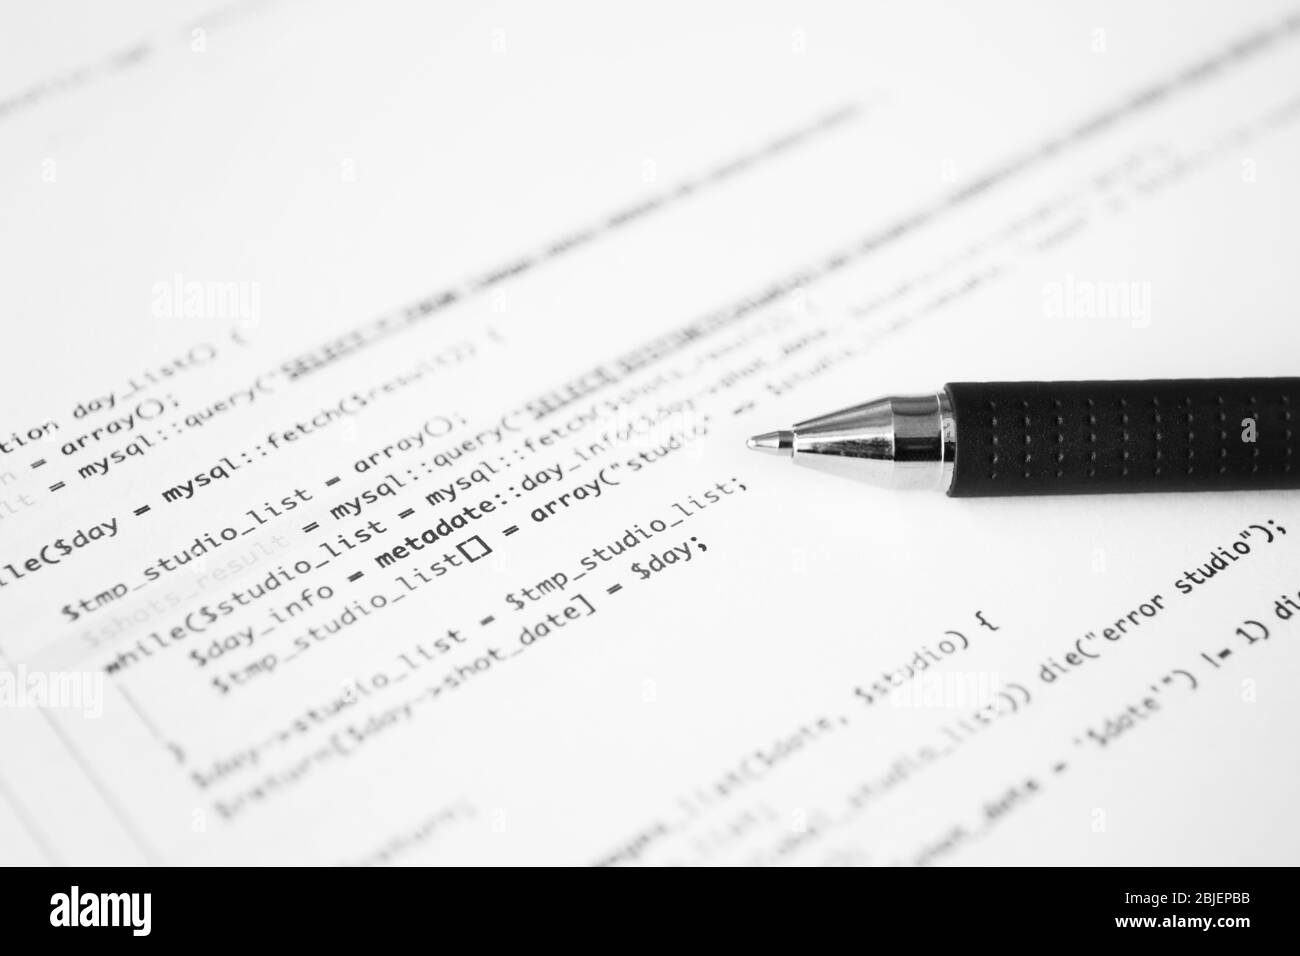 Script code on paper and pen, closeup. Software development concept Stock Photo